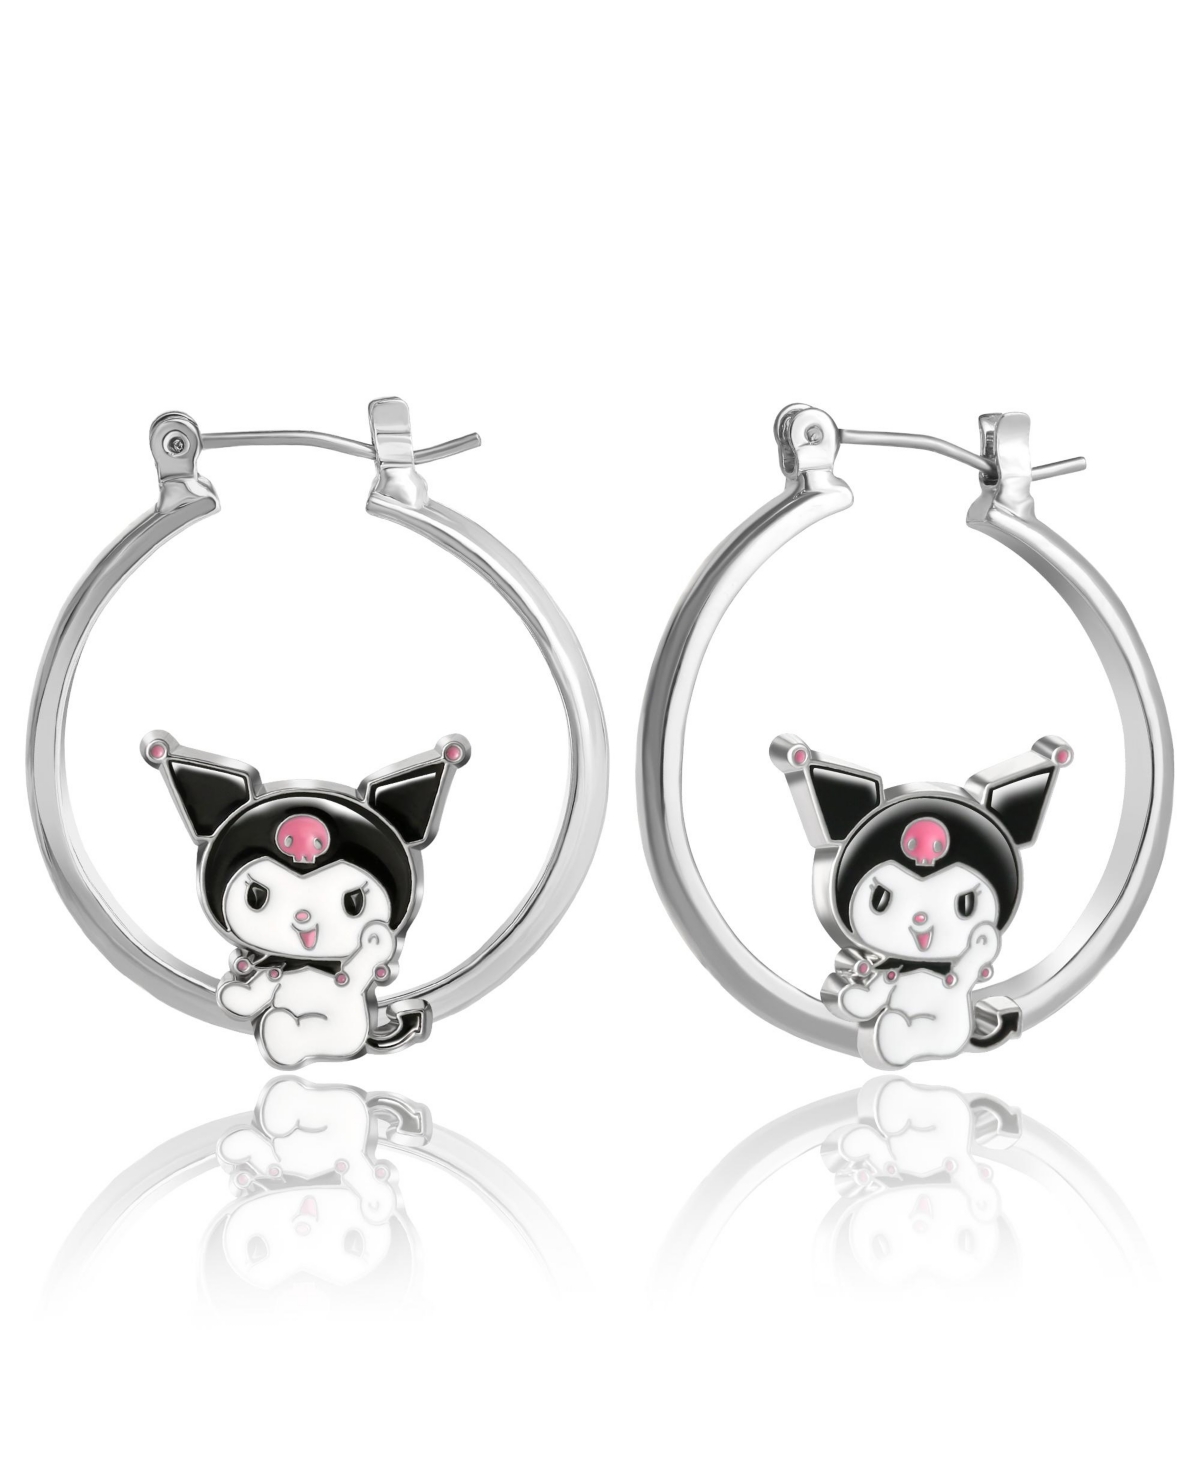 Sanrio Hello Kitty Women's Enamel Plated Hoop Earrings Officially Licensed - Kuromi - Silver tone, black